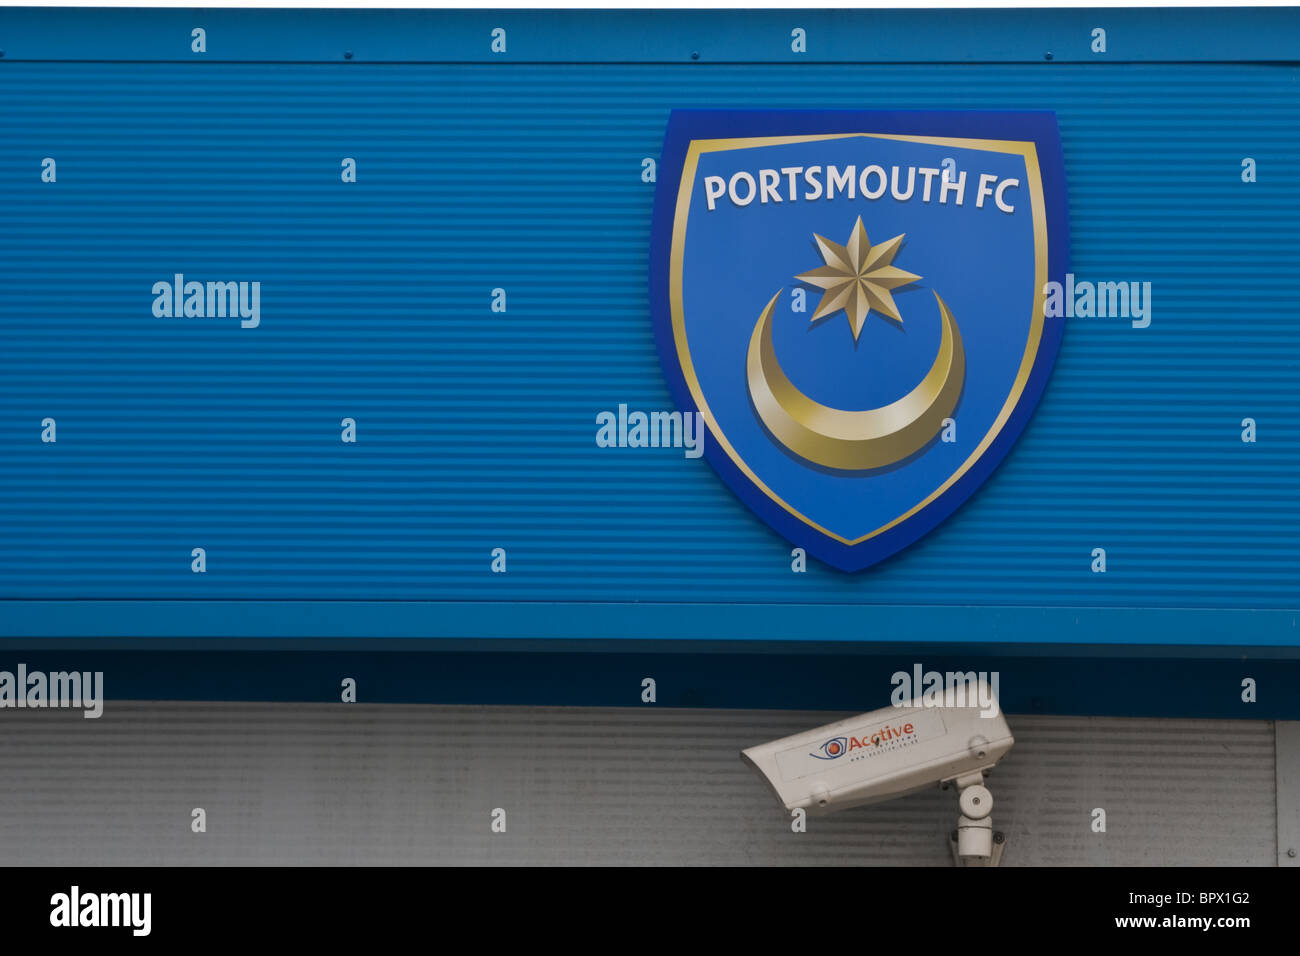 Portsmouth football club logo / sign / motif Stock Photo